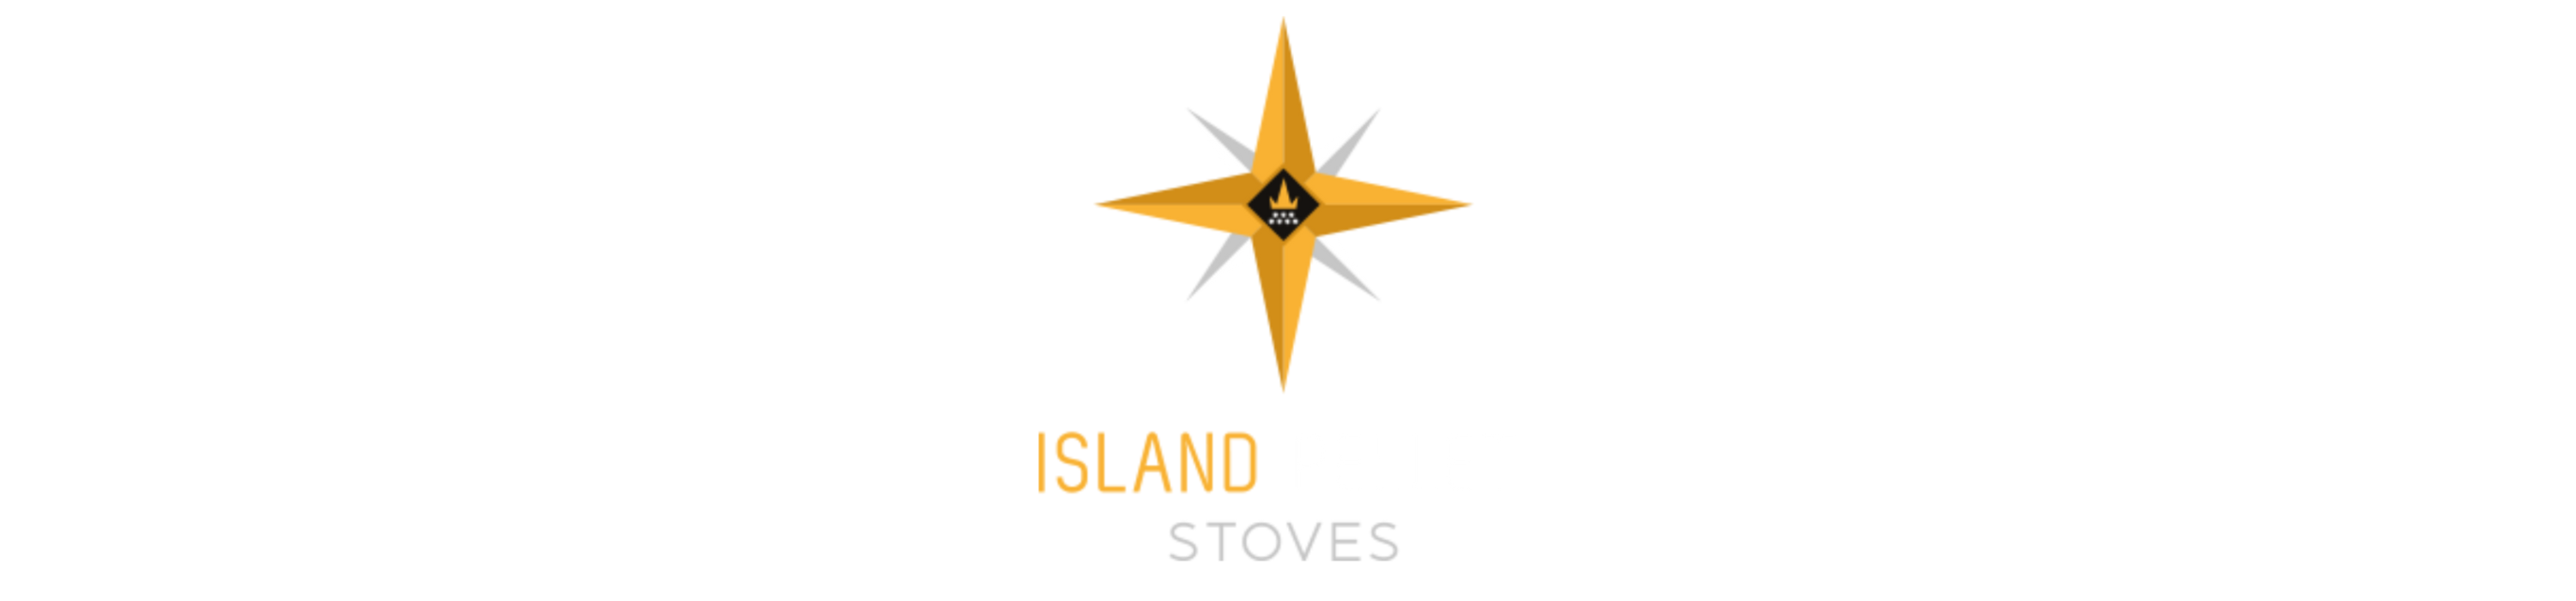 Island Pellet Stoves